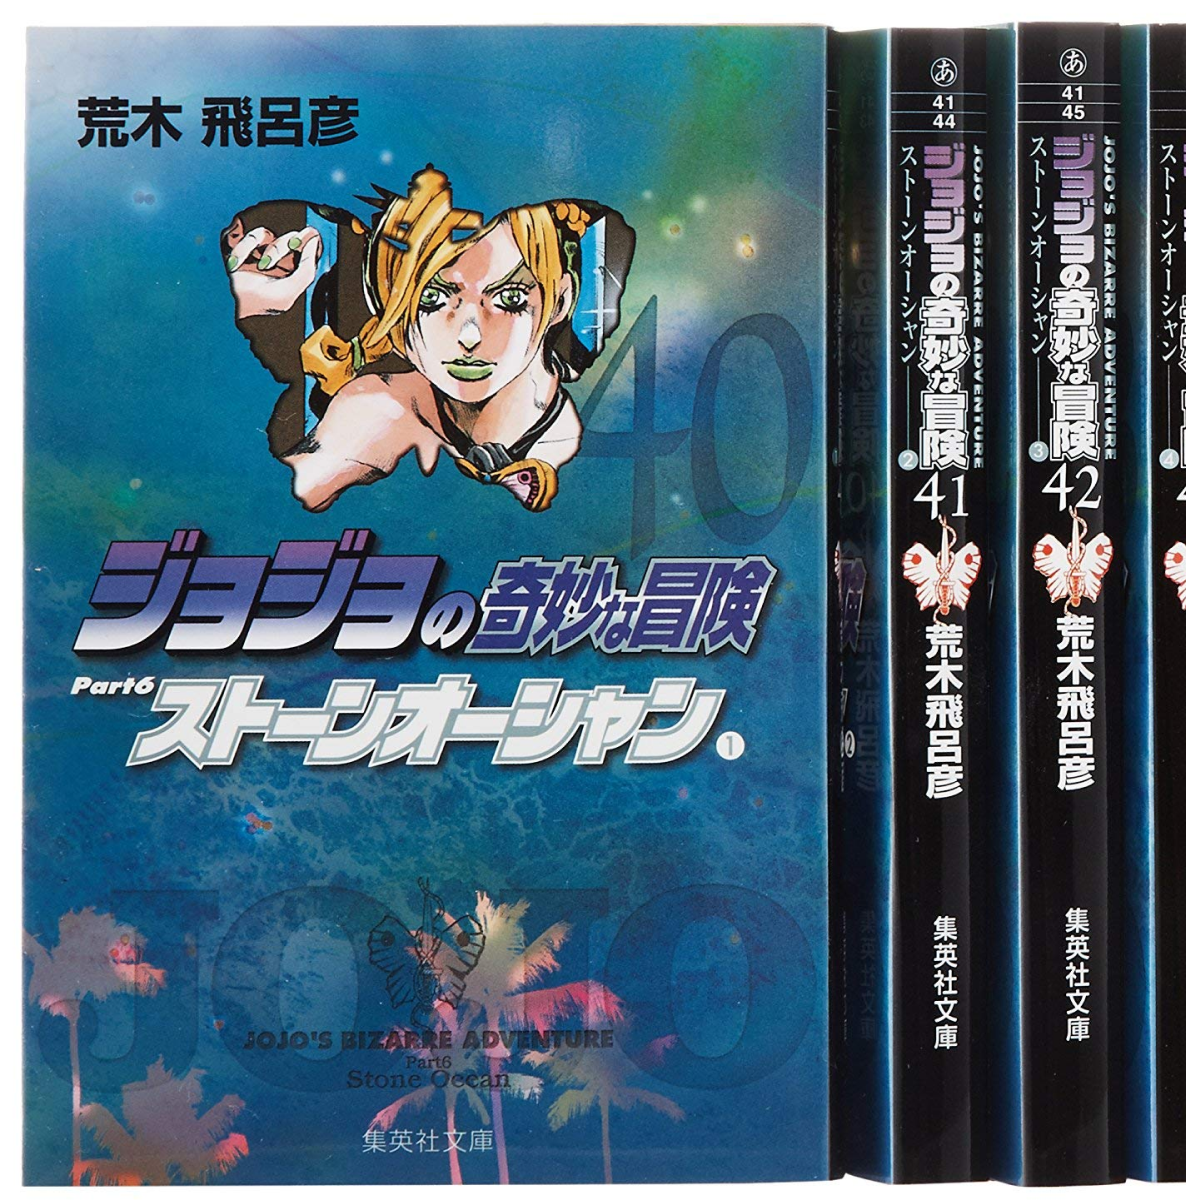 JoJo's Bizarre Adventure Stone Ocean Anime Metal Collection Box of 24 :  : Toys & Games